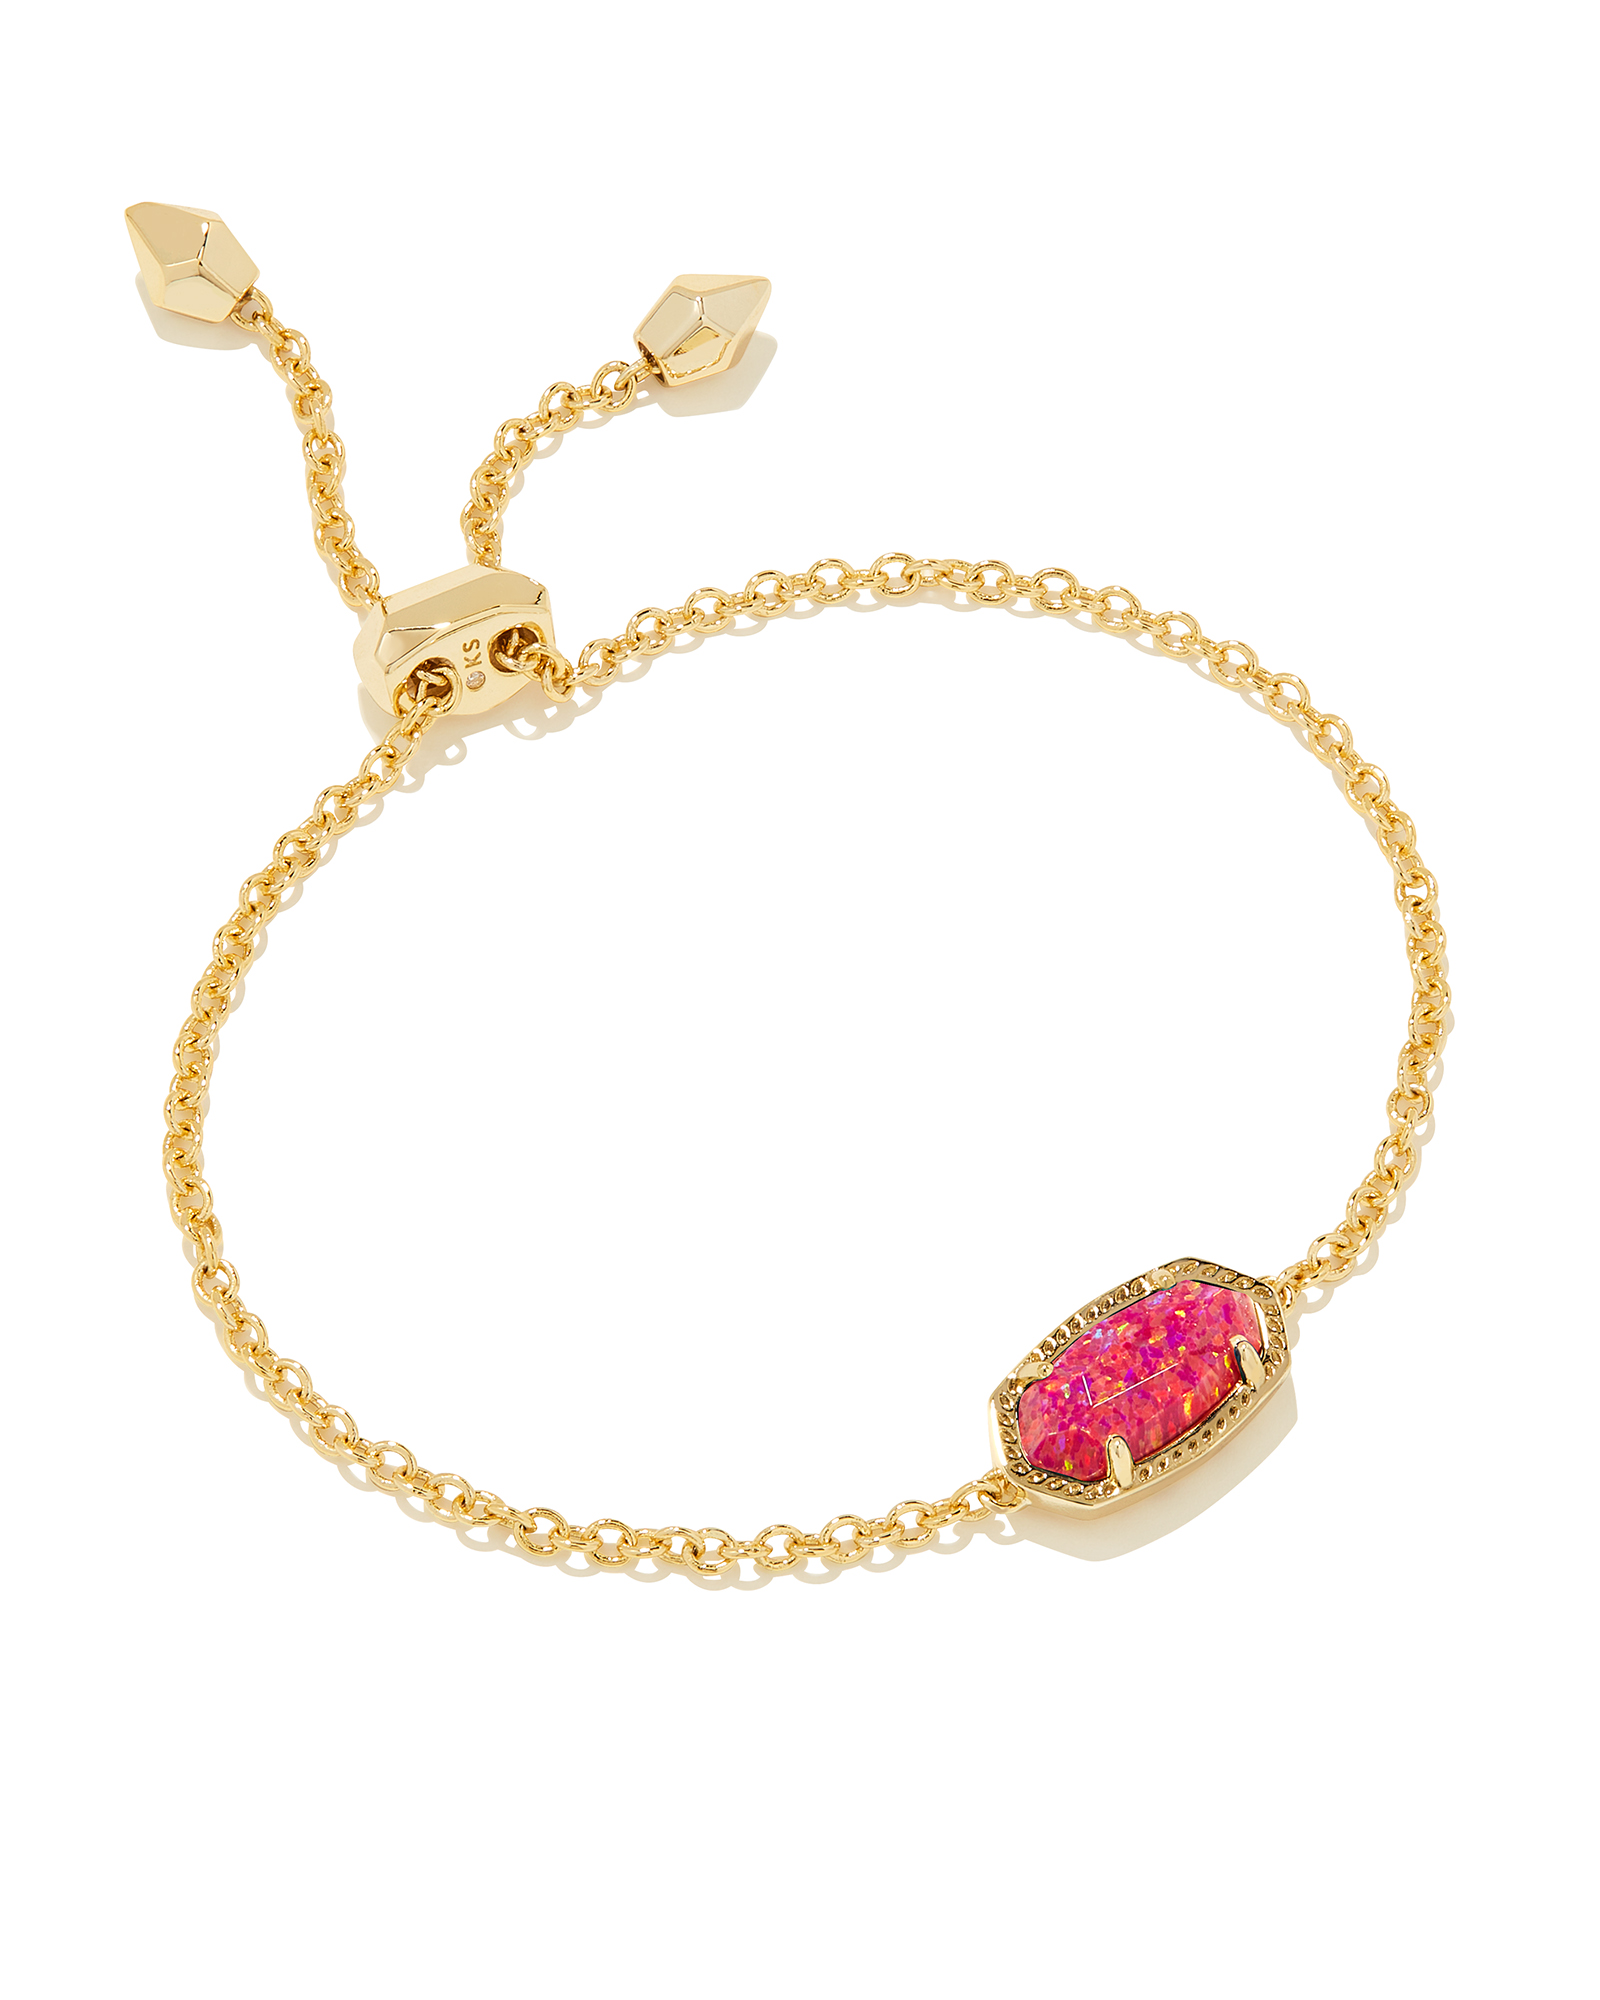 Elaina Gold Delicate Chain Bracelet in Berry Kyocera Opal | Kendra Scott